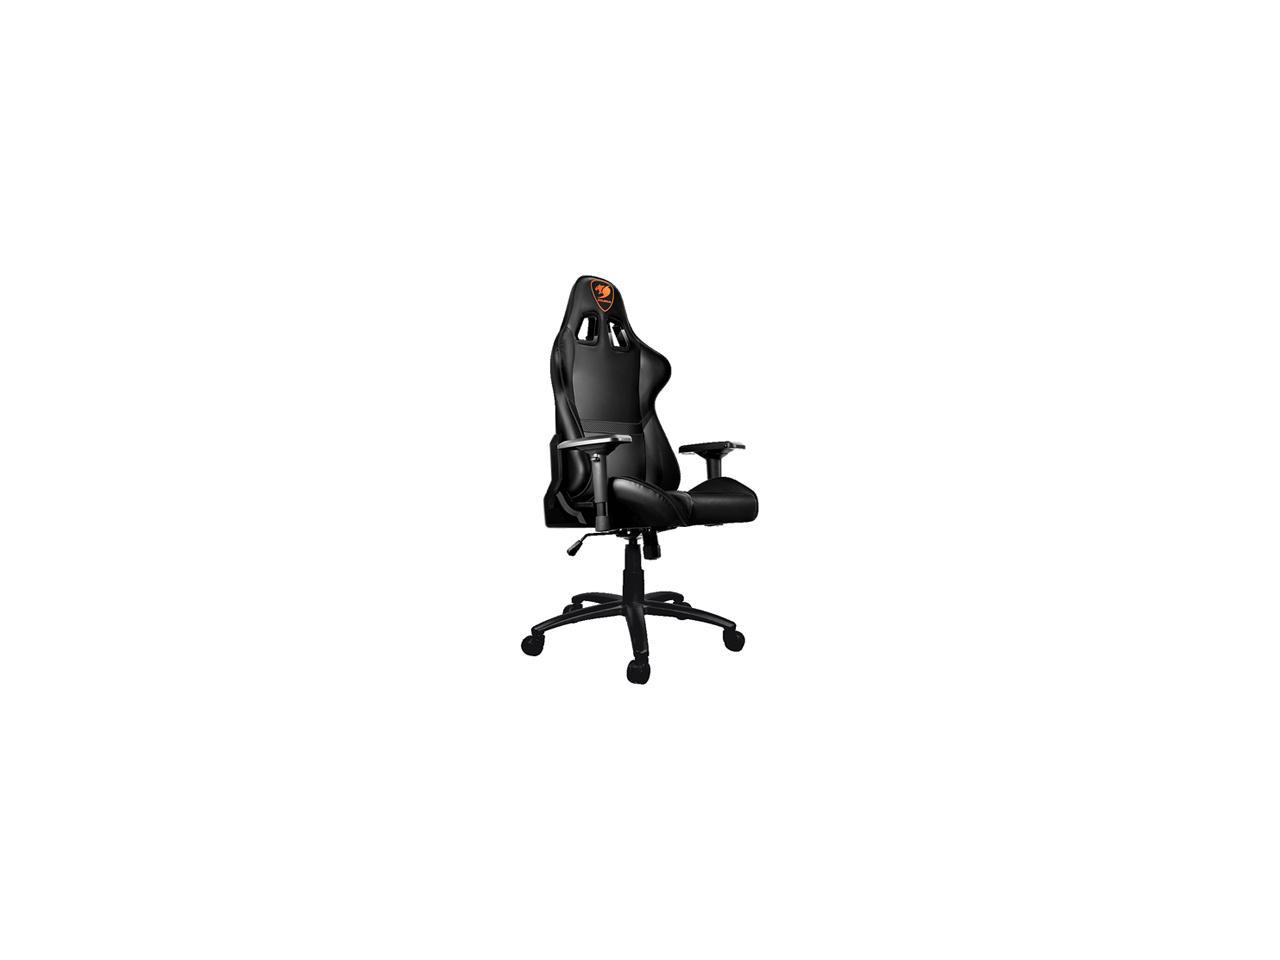 Cougar Armor Gaming Chair (Black)